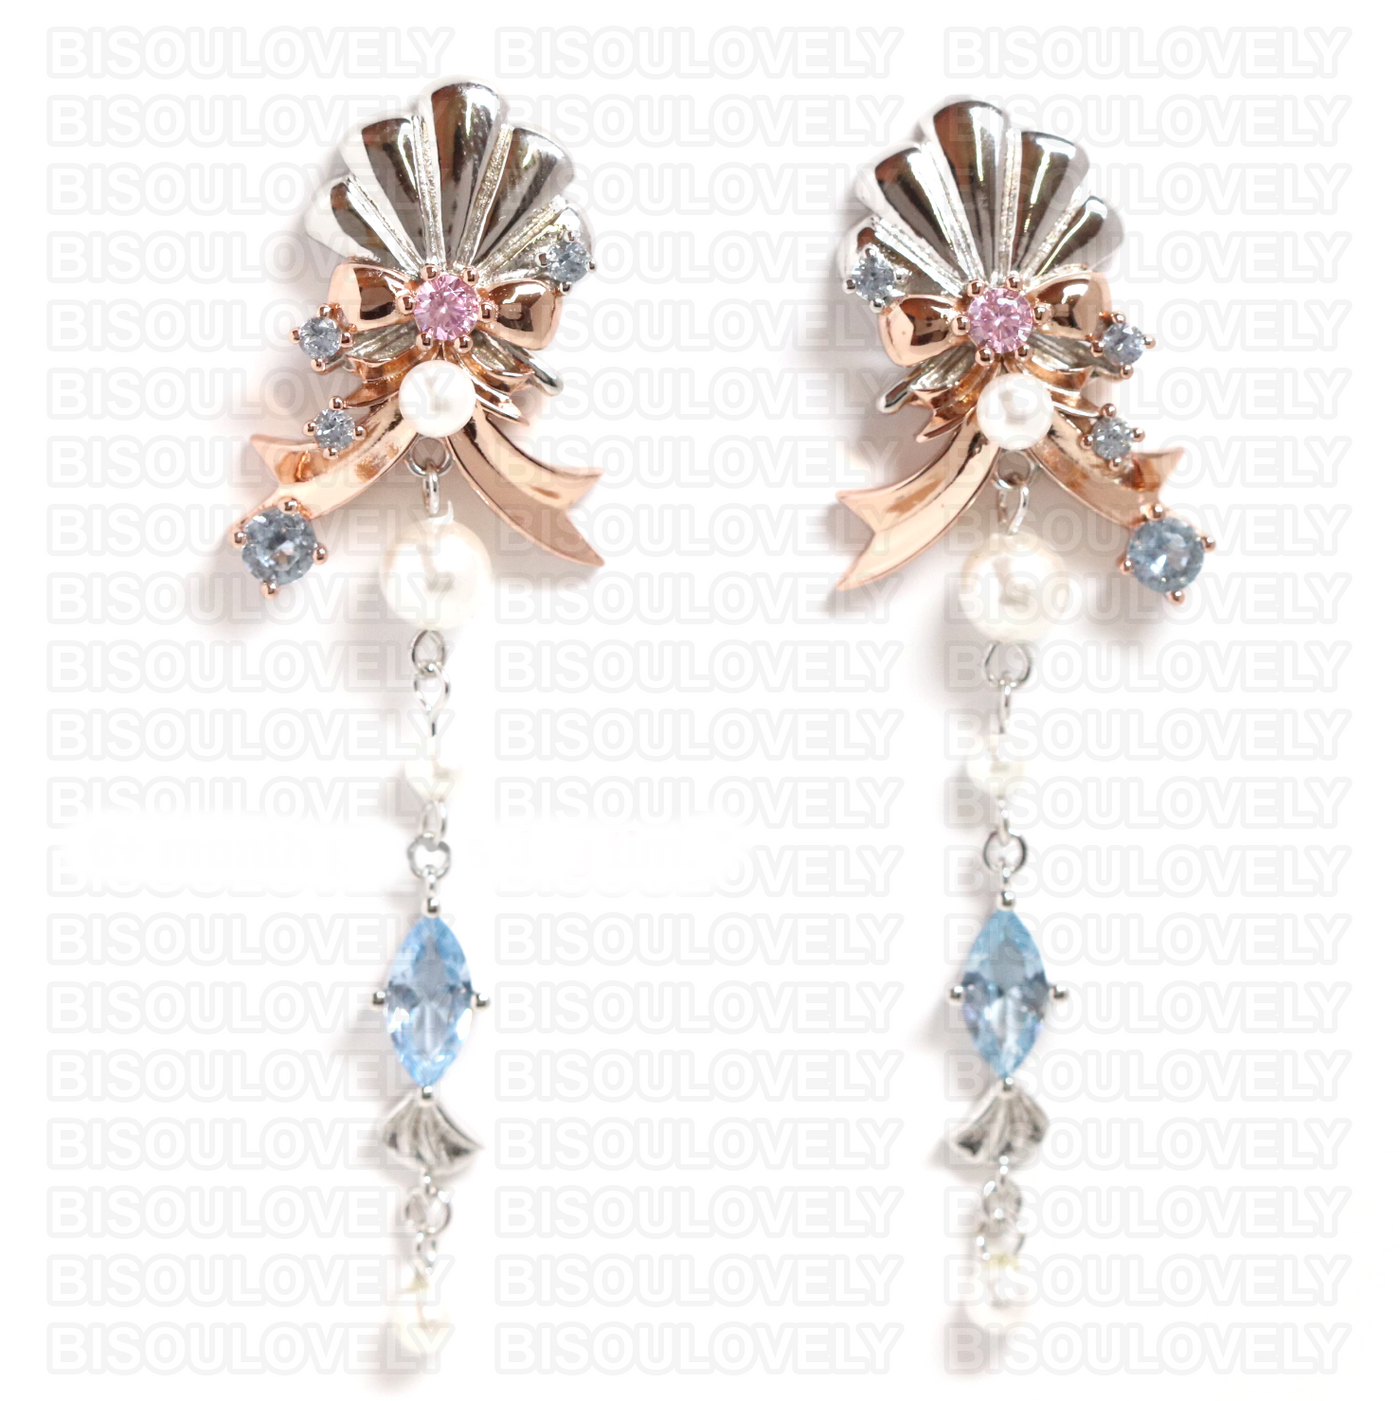 Sleeping Dragoness Earrings - Earrings - 1